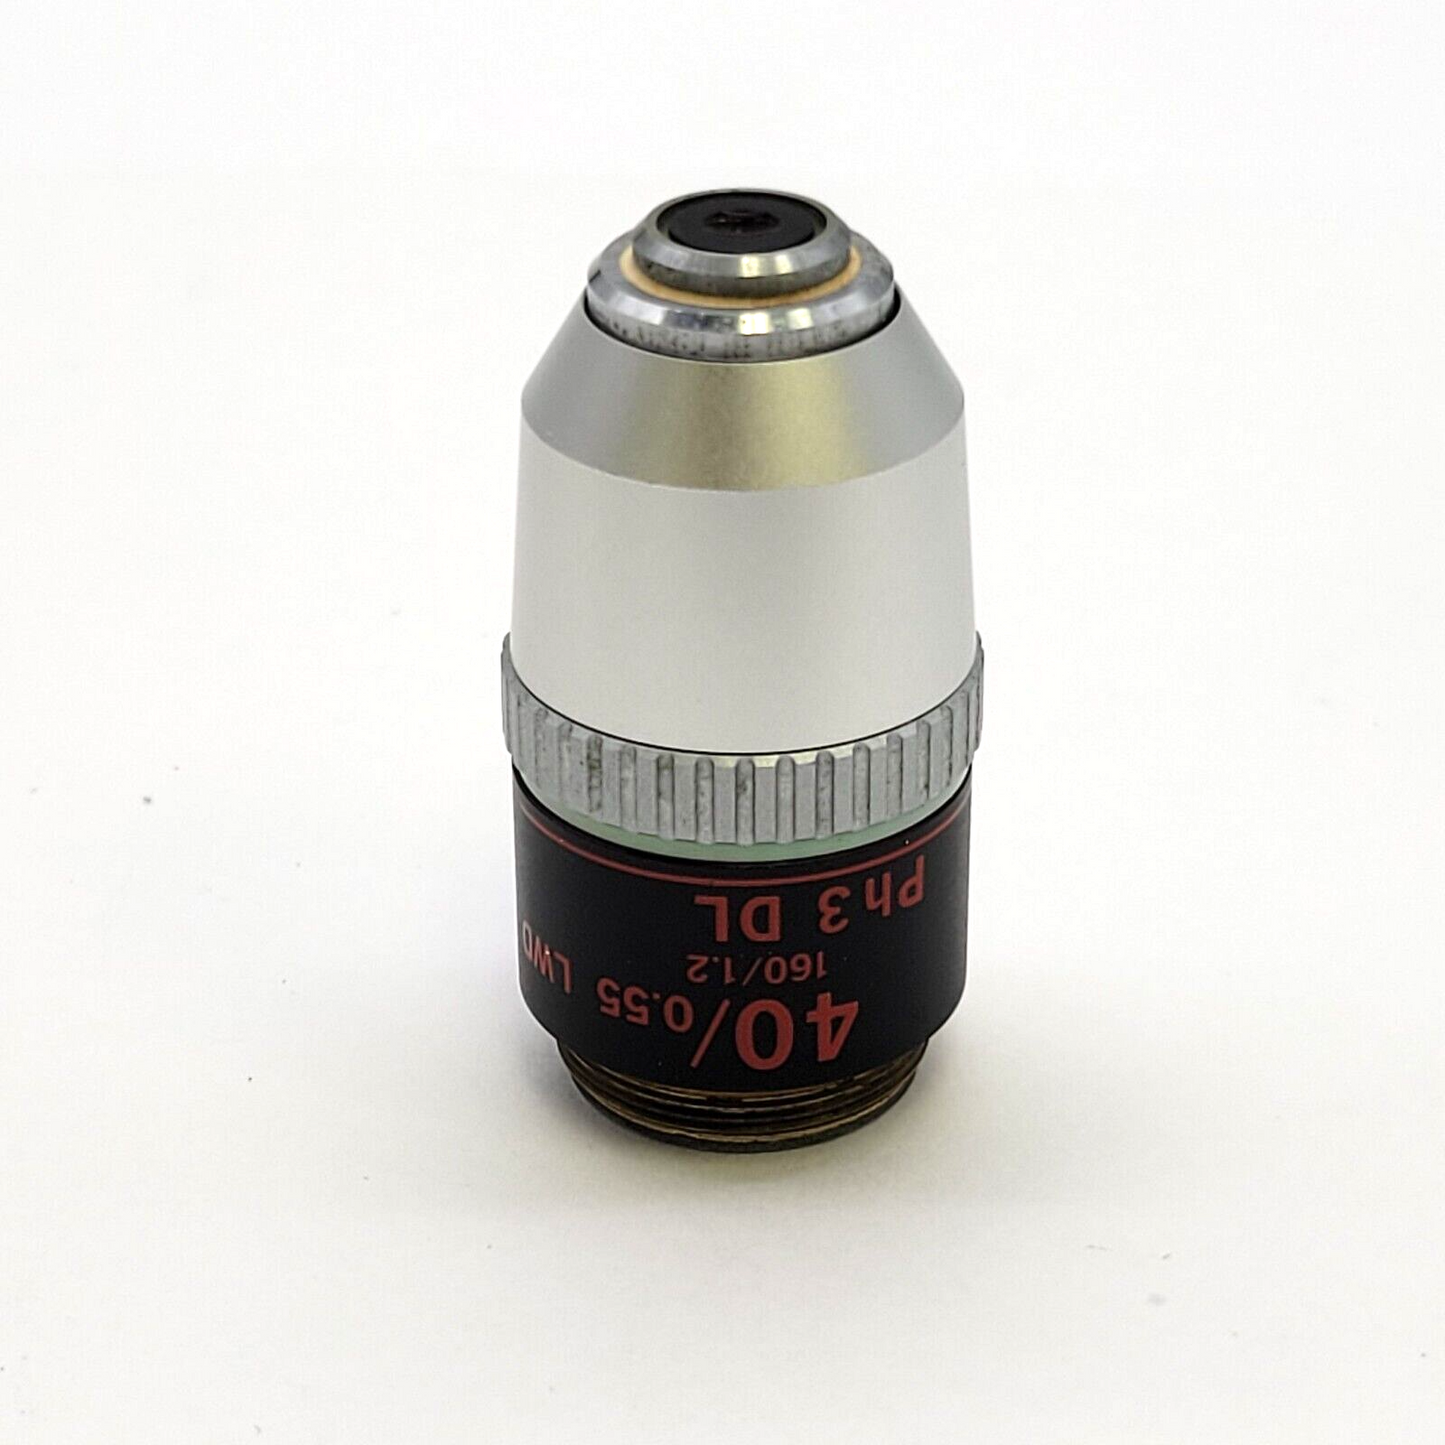 Nikon Microscope Objective 40x LWD Ph3 DL 160/1.2 Phase Contrast - microscopemarketplace